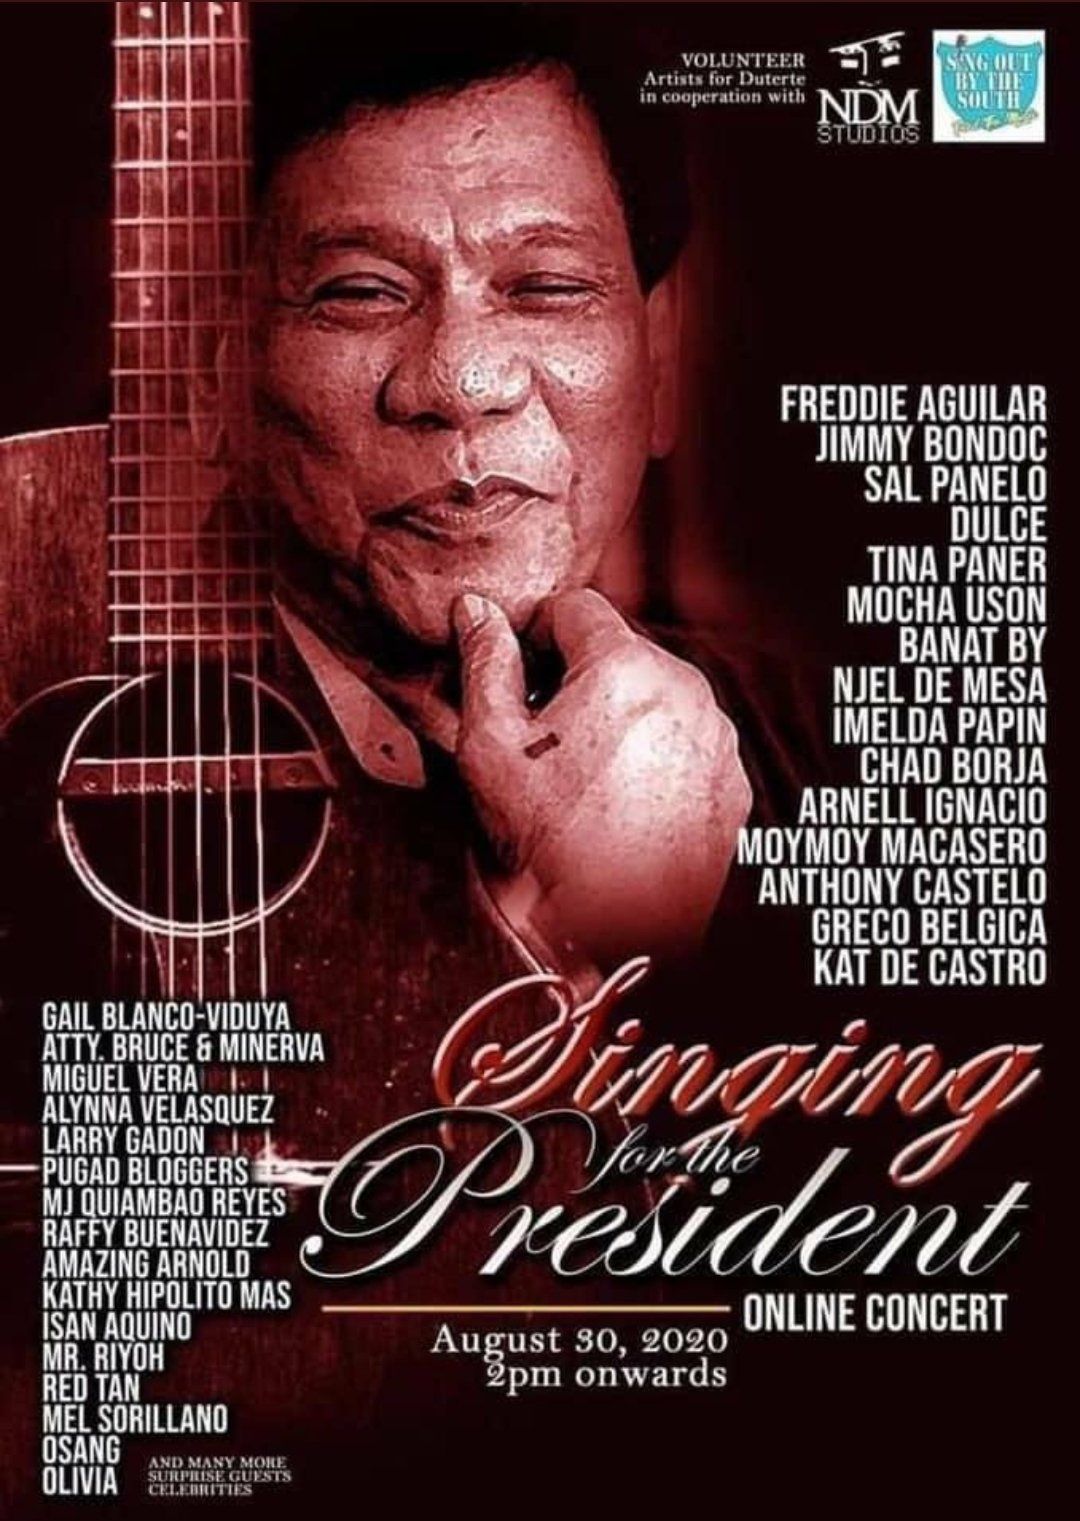 Singing for the President